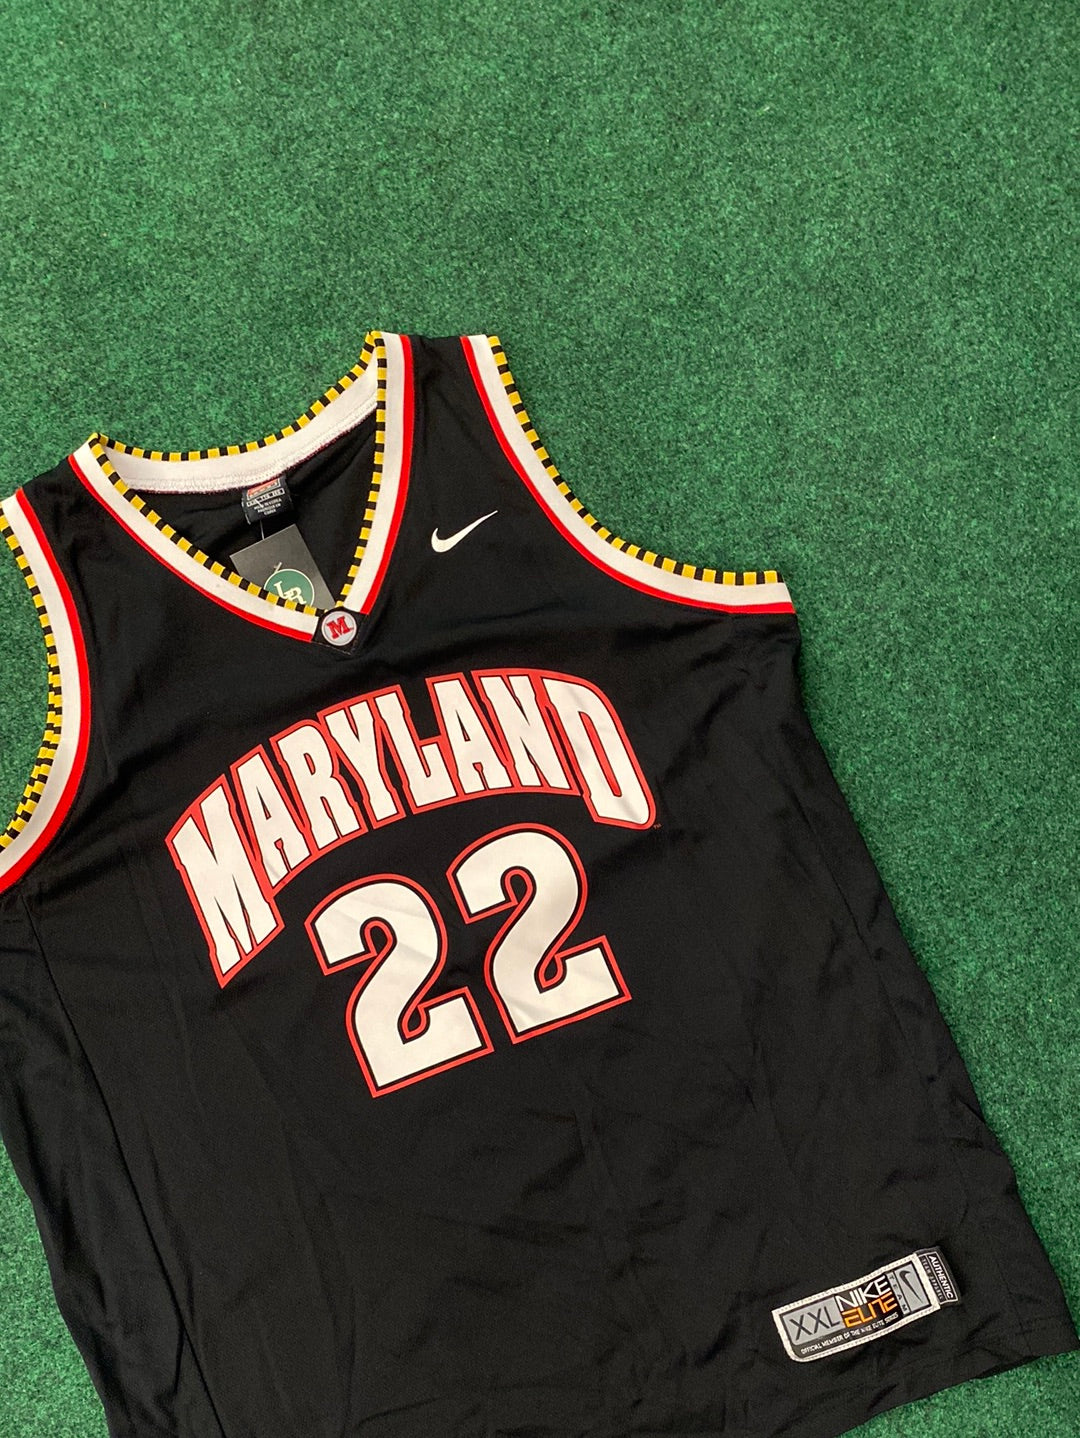 00s Black Maryland Terrapins Basketball Vintage Jersey (2XL)